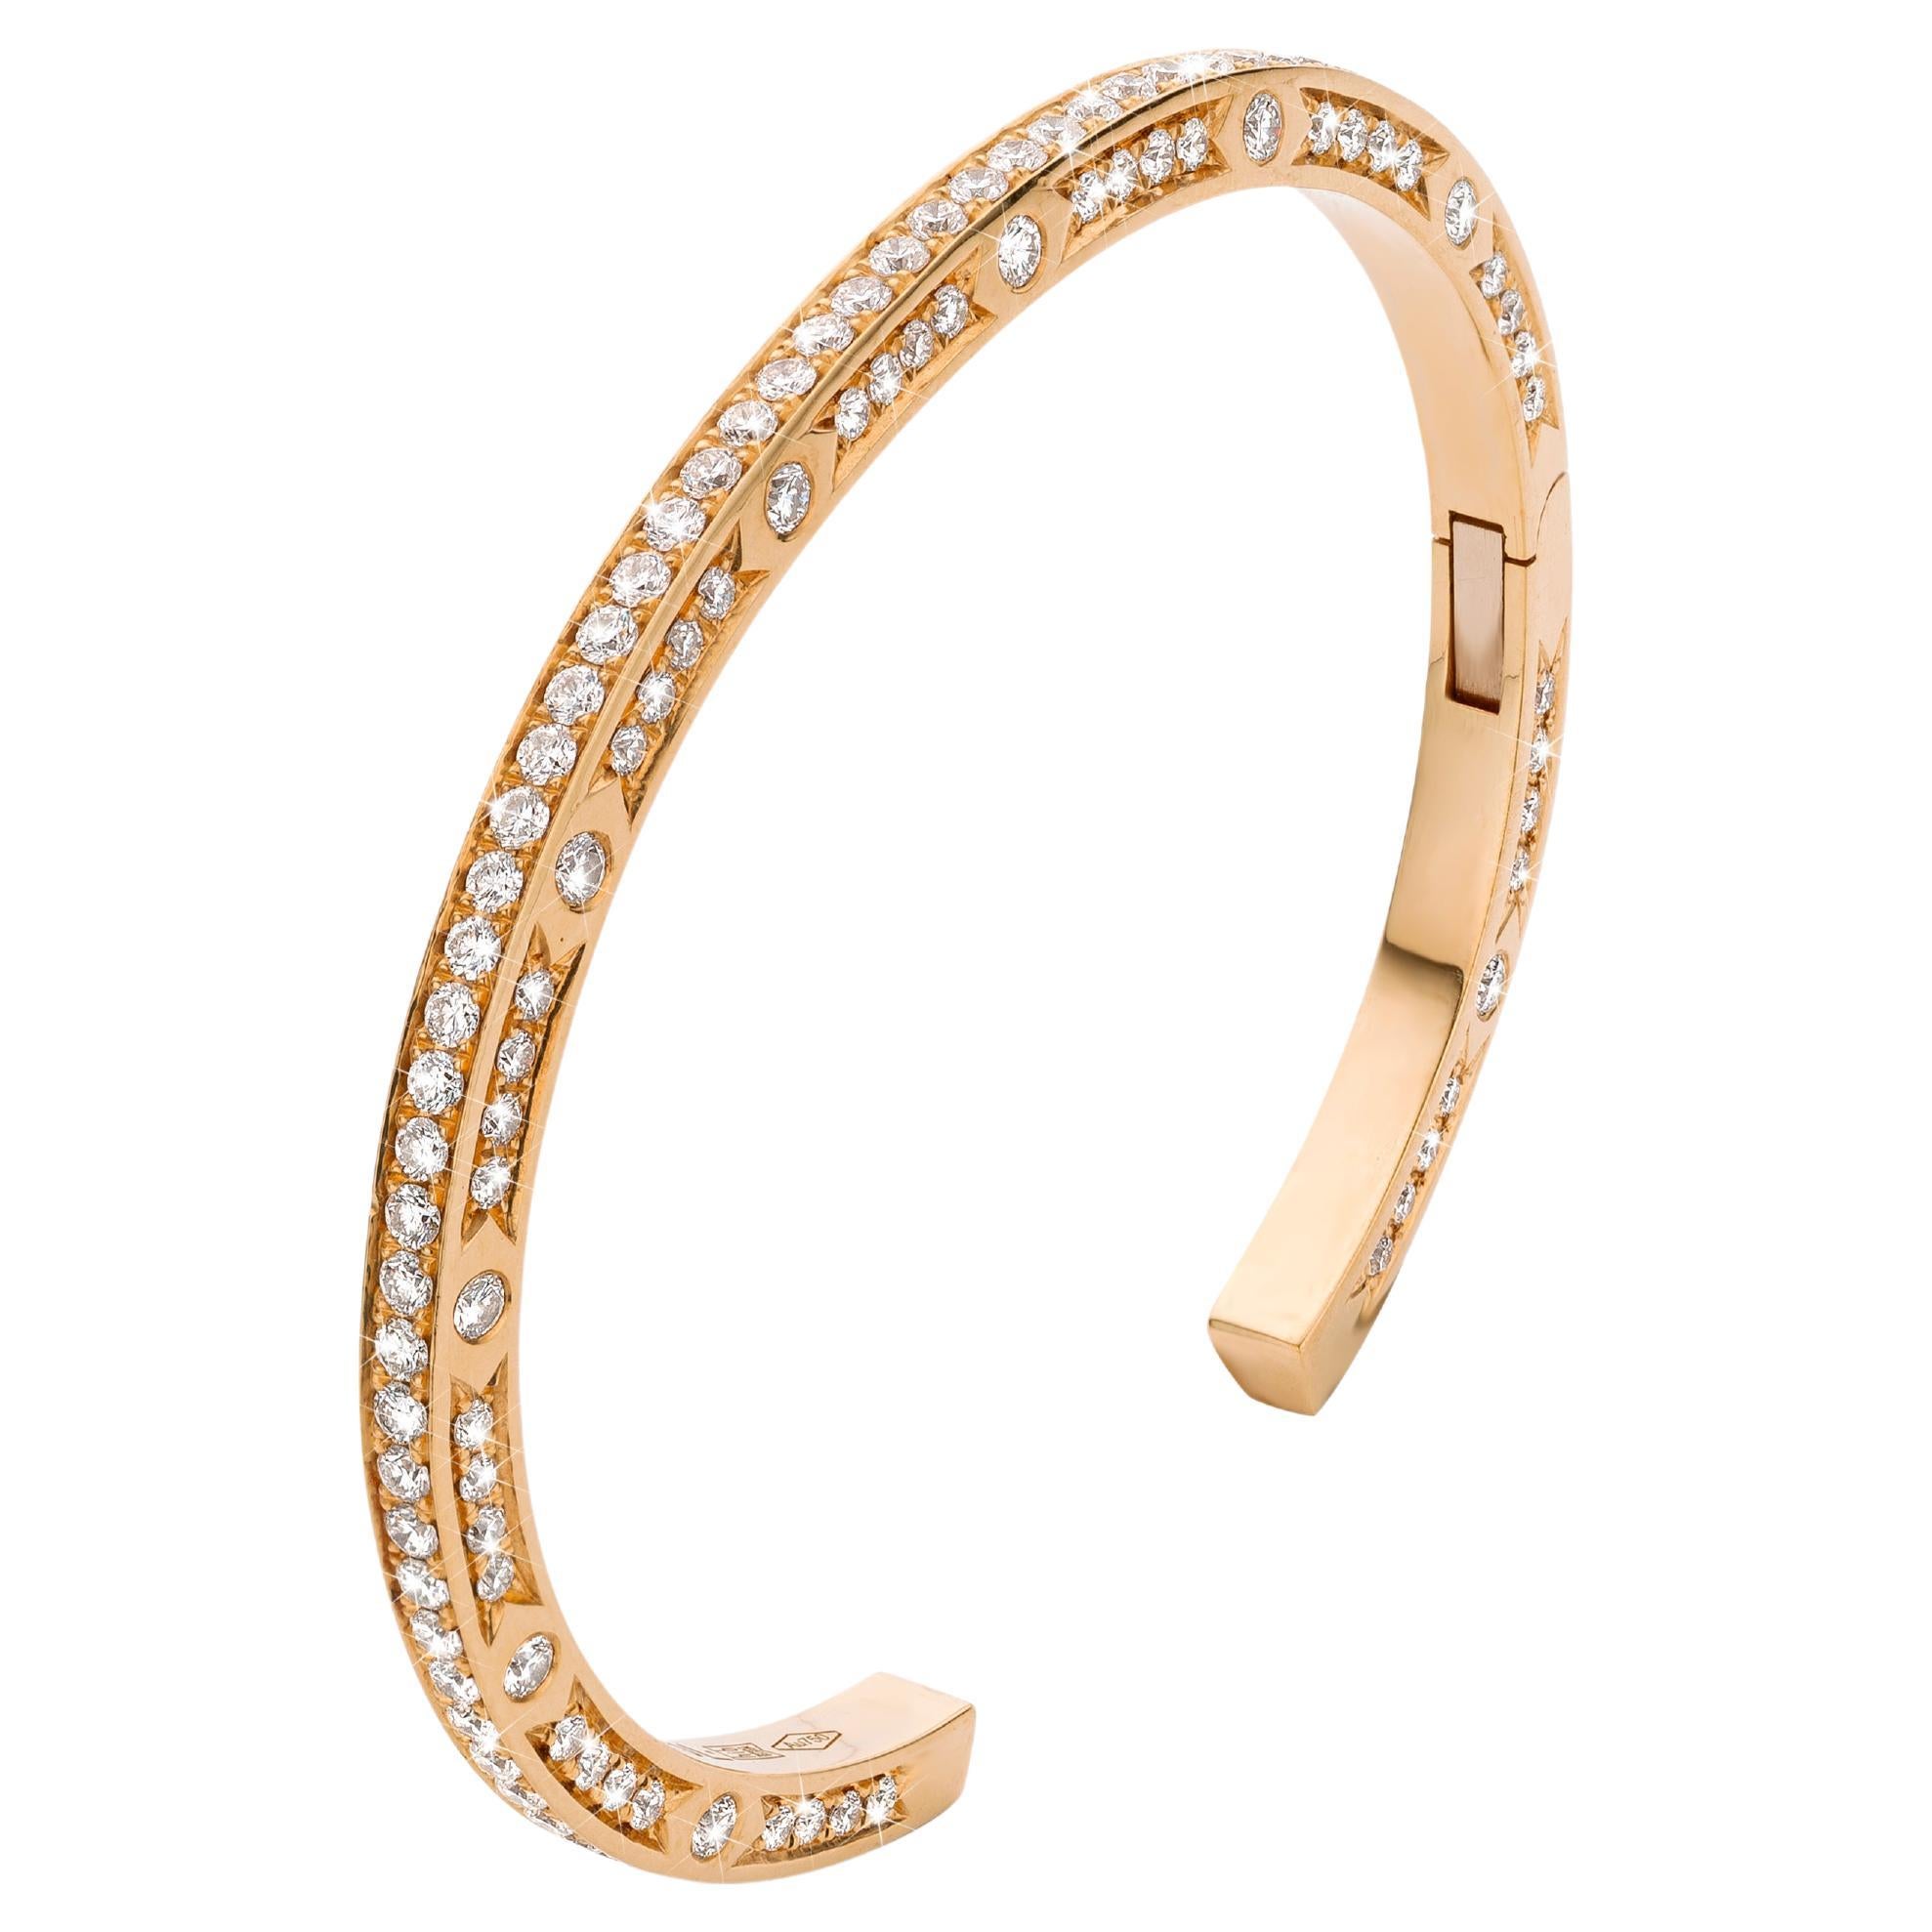 18K Rose Gold 4.21 Carat White Diamonds Bracelet by Jochen Leën For Sale